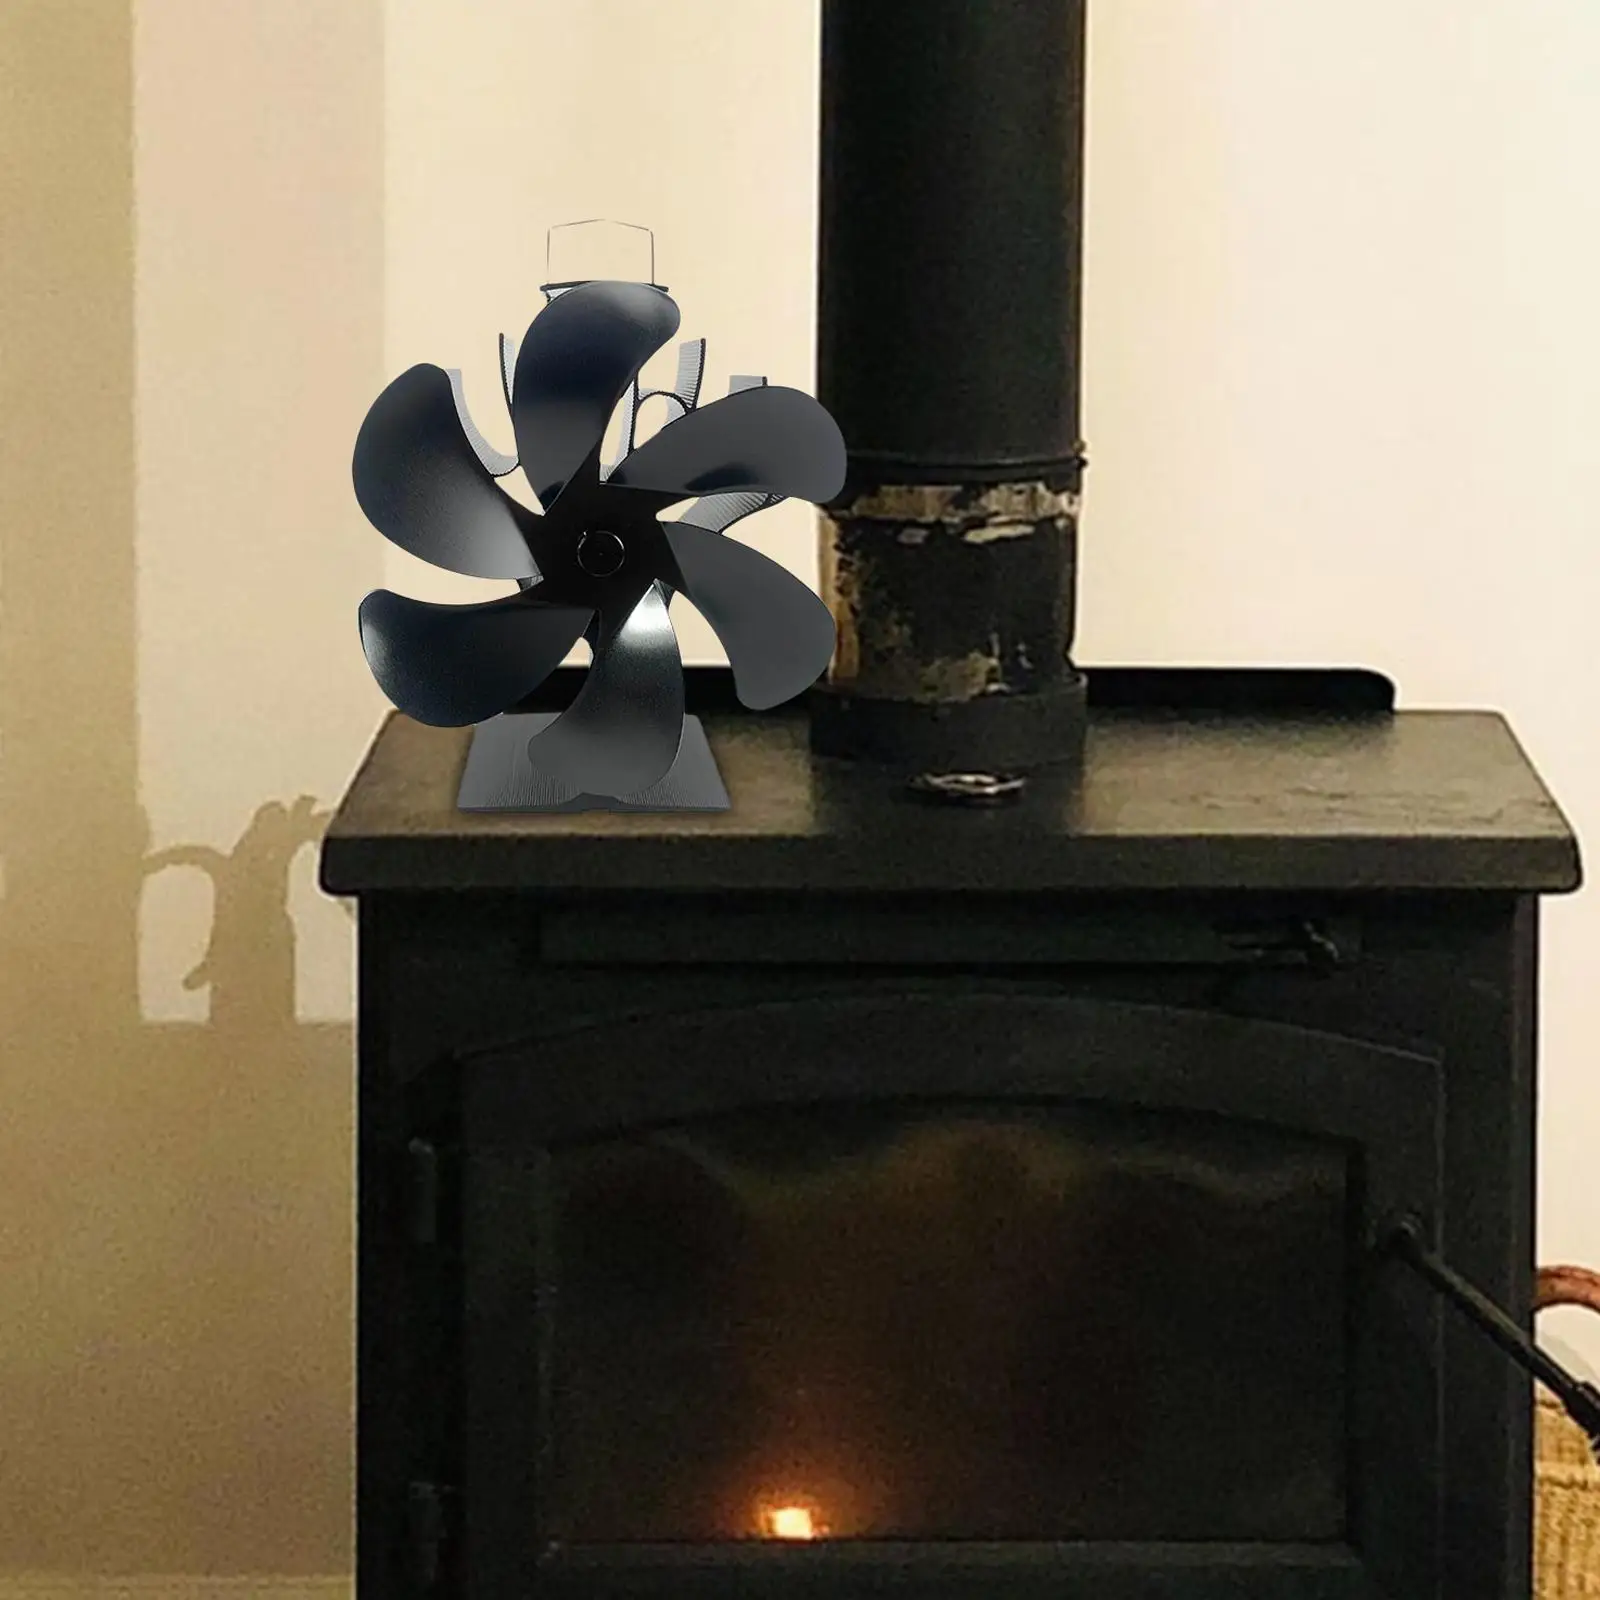 6 Blades Heat Powered Fireplace Fan Burner Fireplace Fan for Wood Stove Accessories Wood/log Burner Heaters Winter Home